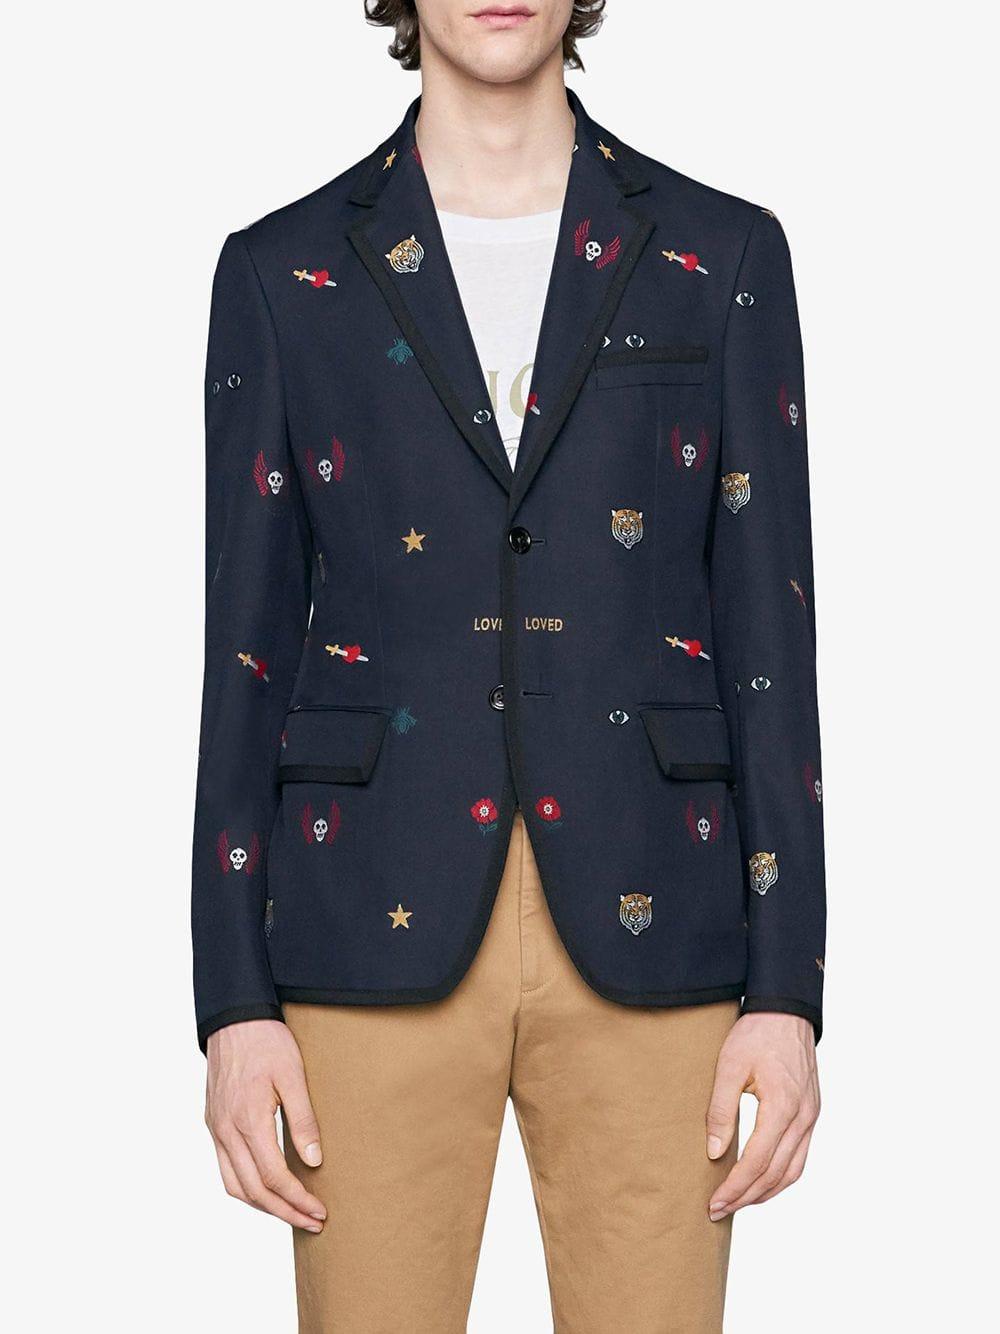 Gucci Cambridge Jacket With Symbols in 